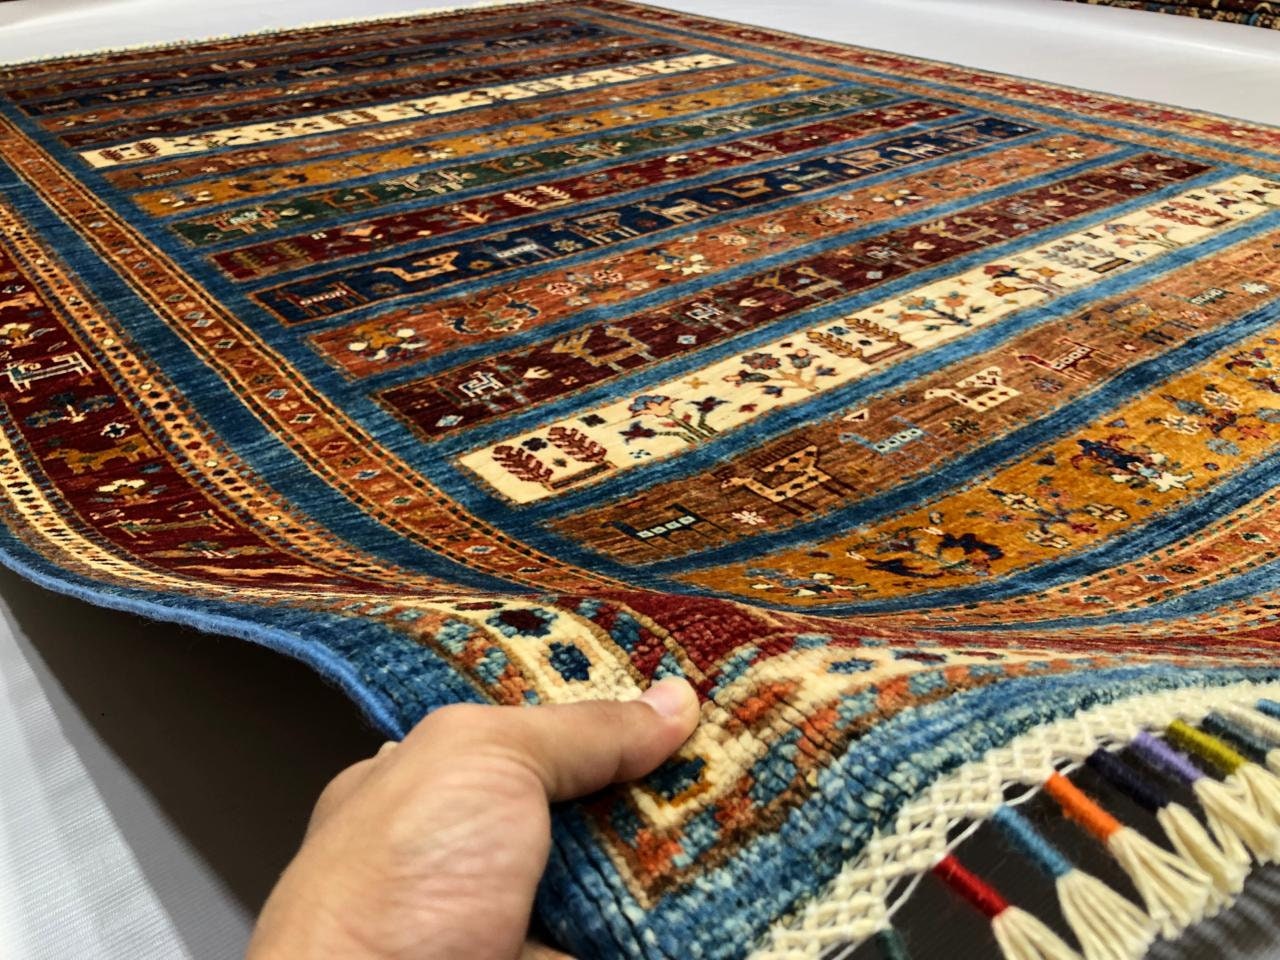 10x7 Feet Top Quality Mamluk Handmade Afghan Rug, Persian Designed from Tribal Ghazni | Living room Carpet, Neon Colored